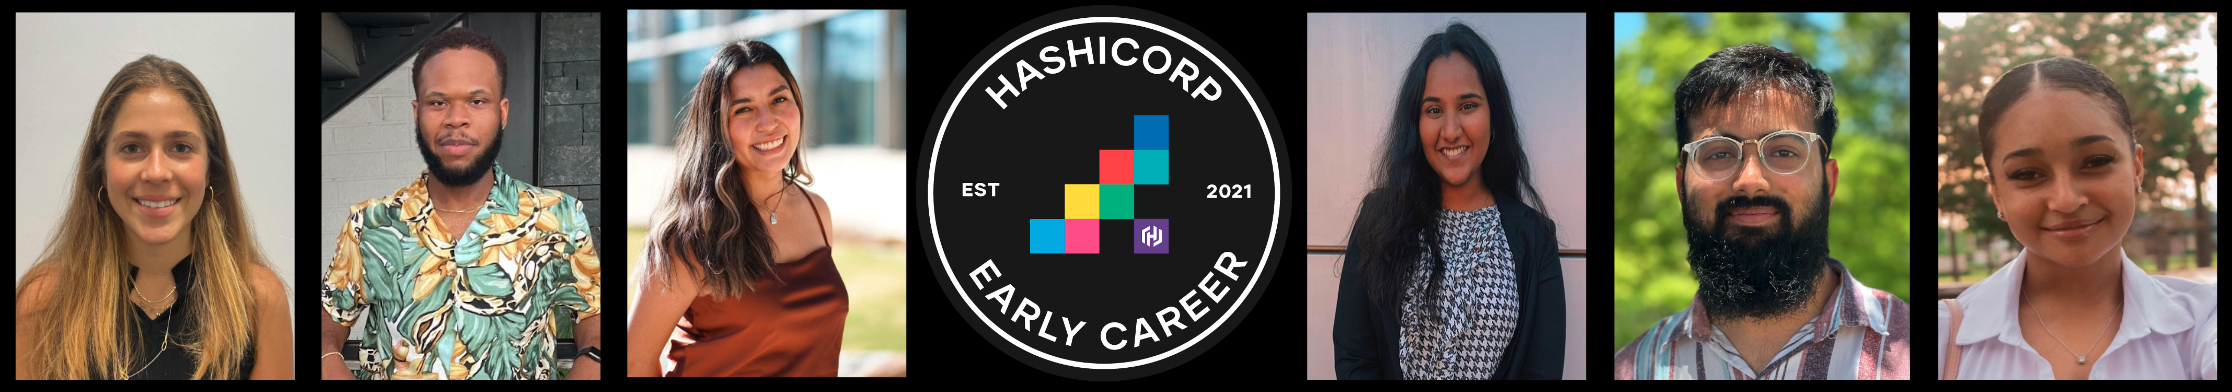 6 HashiCorp Early Career Program 2022 interns